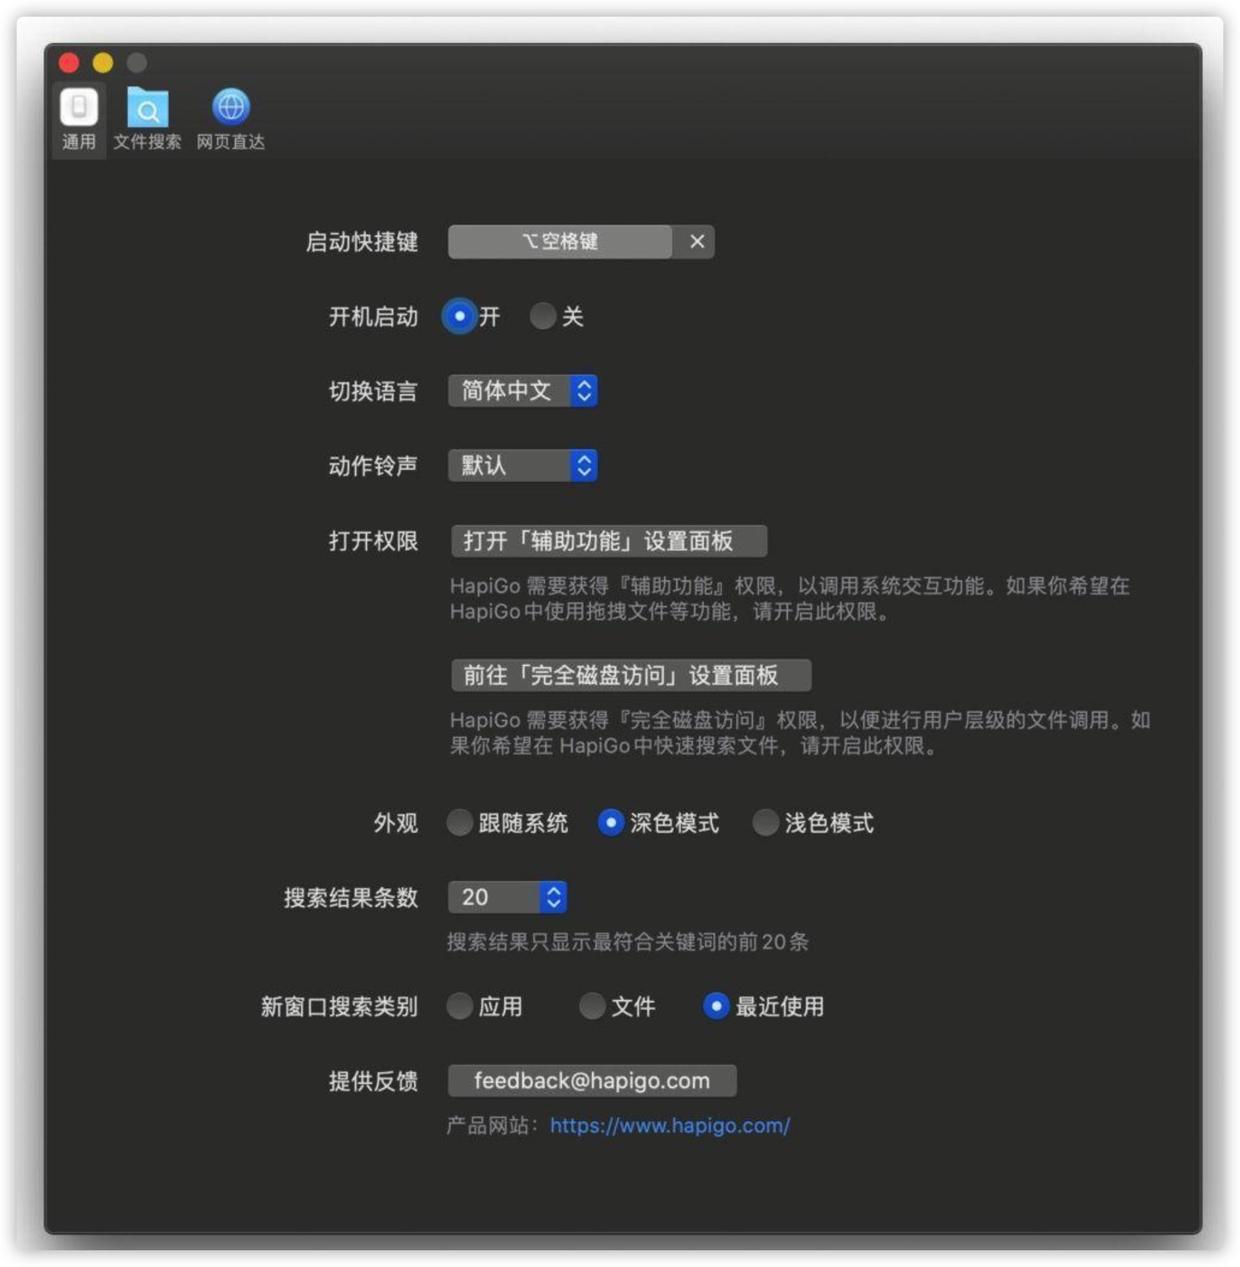 HapiGo 1.1.0 (18) 中文版 (全新的文件启动方式) - 图7